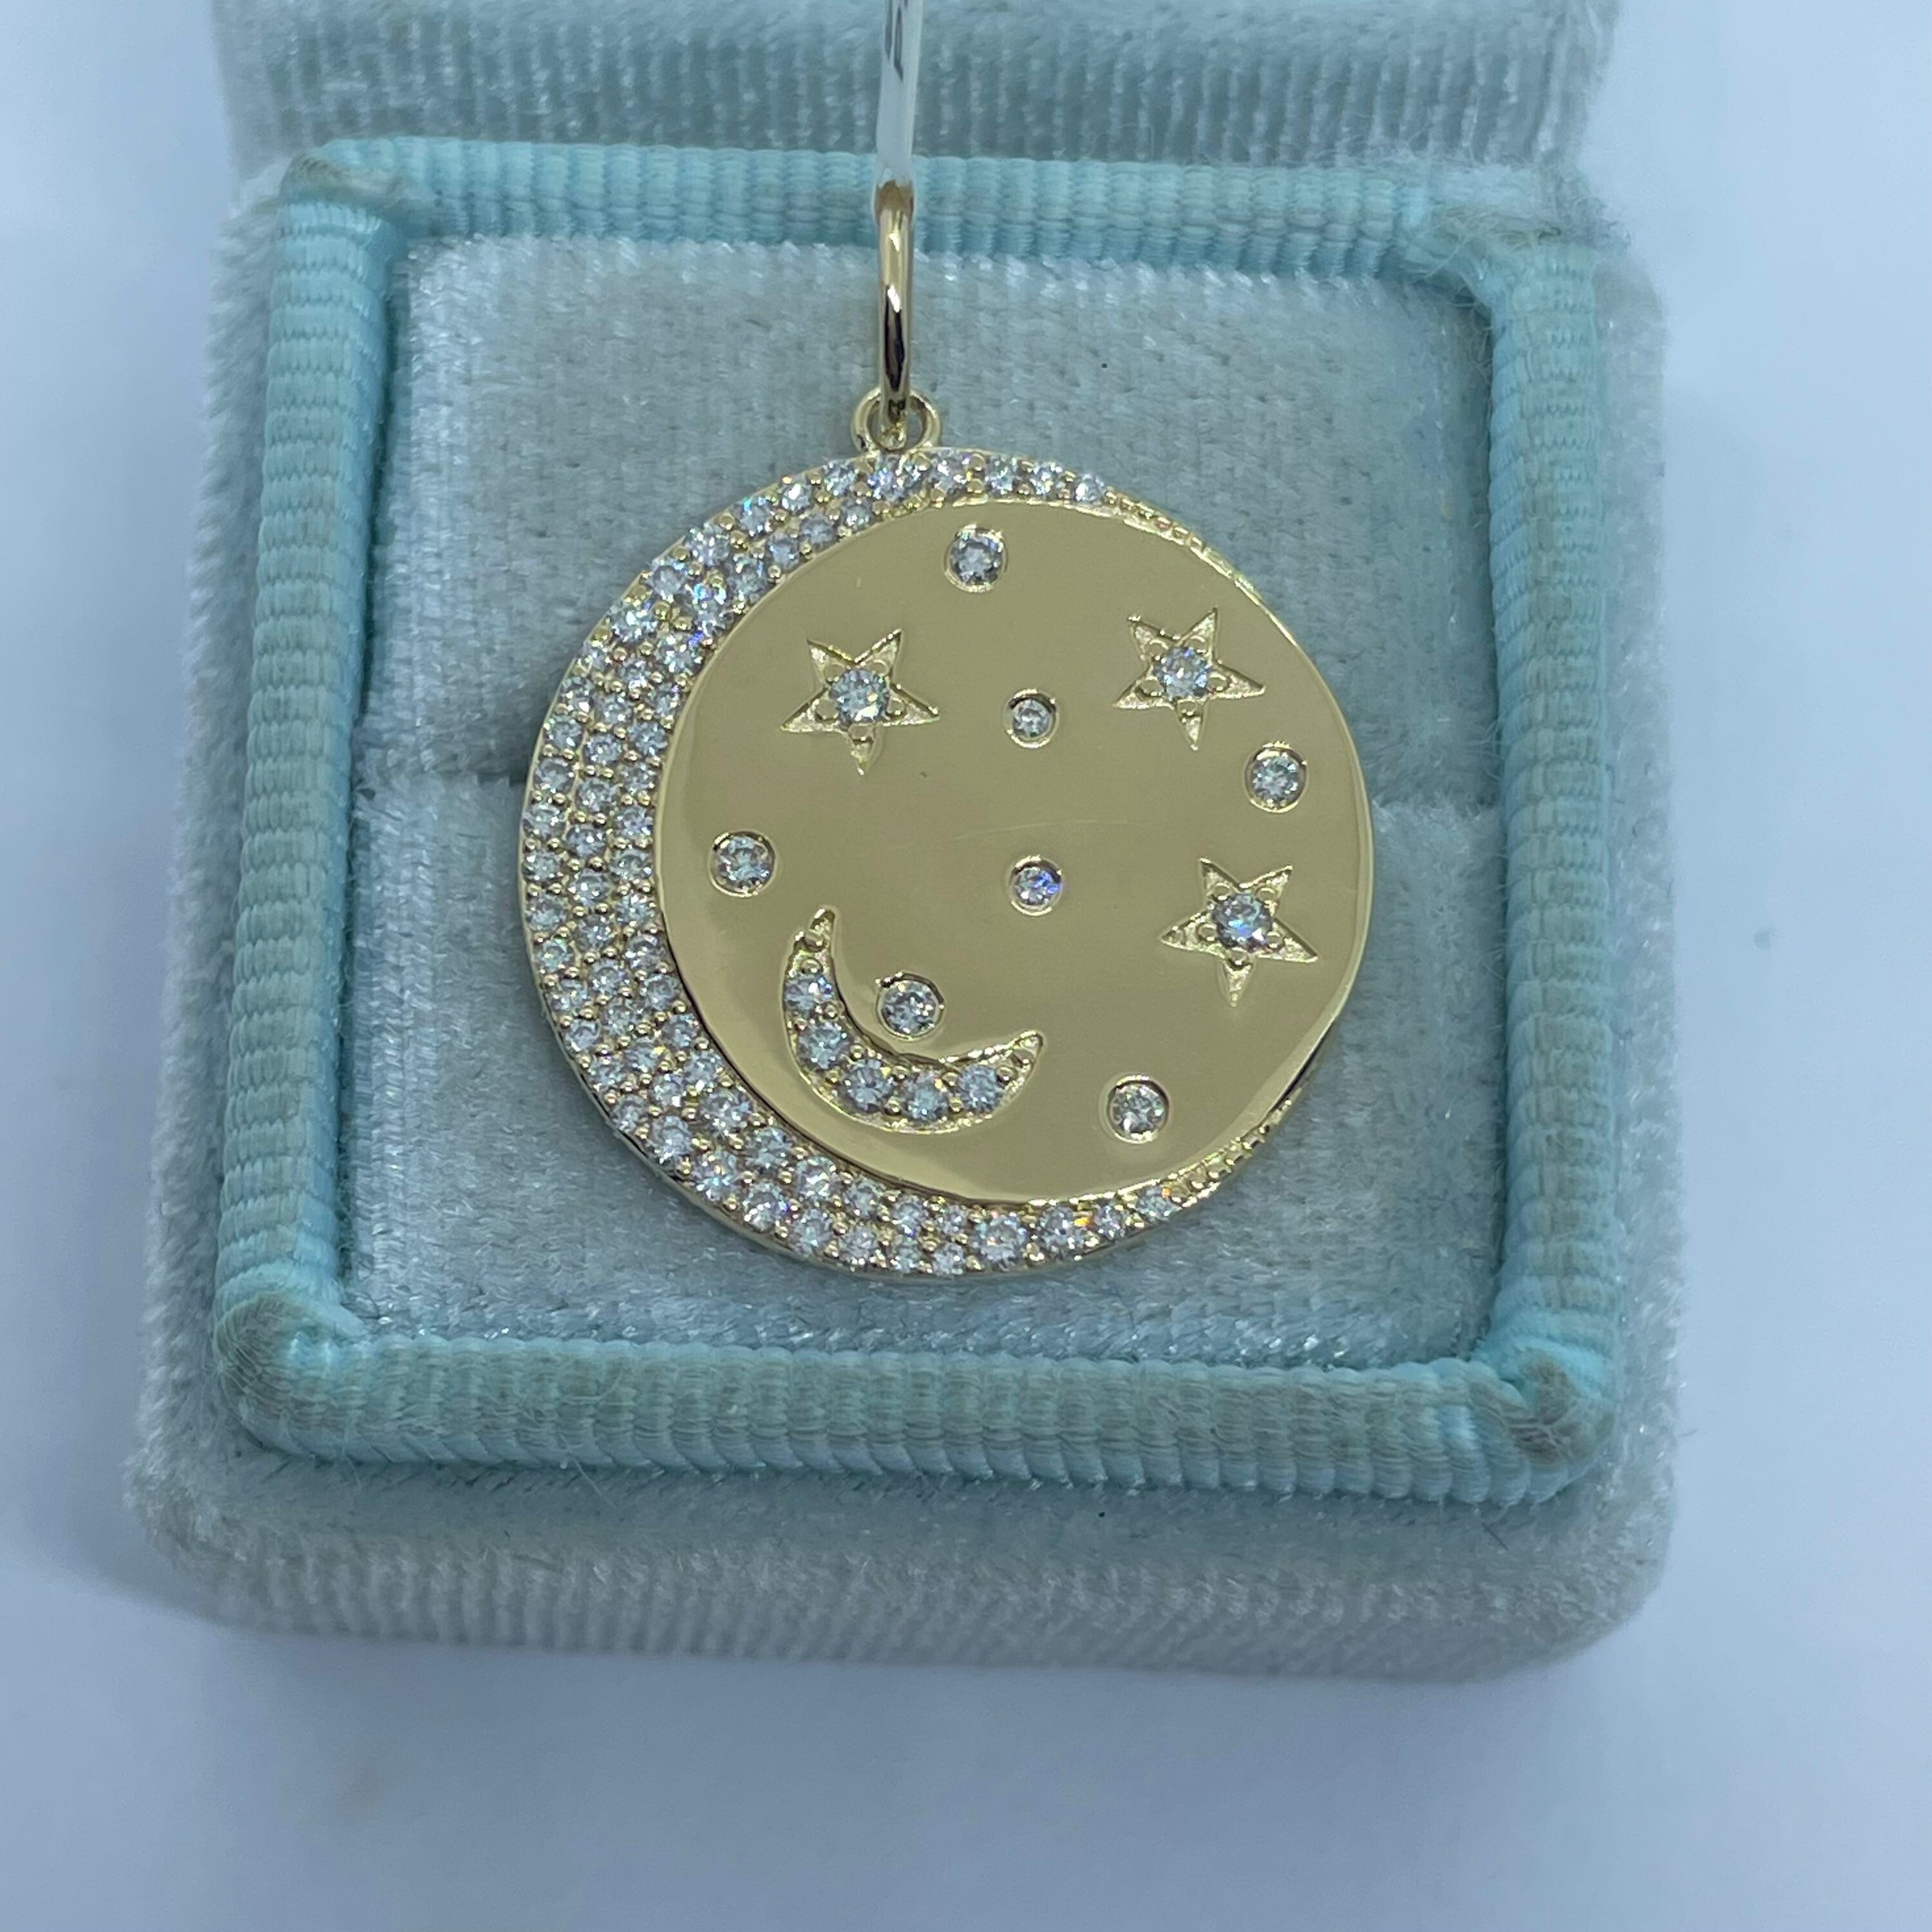 2 Moon stars blue pendant antique silver tone M95 